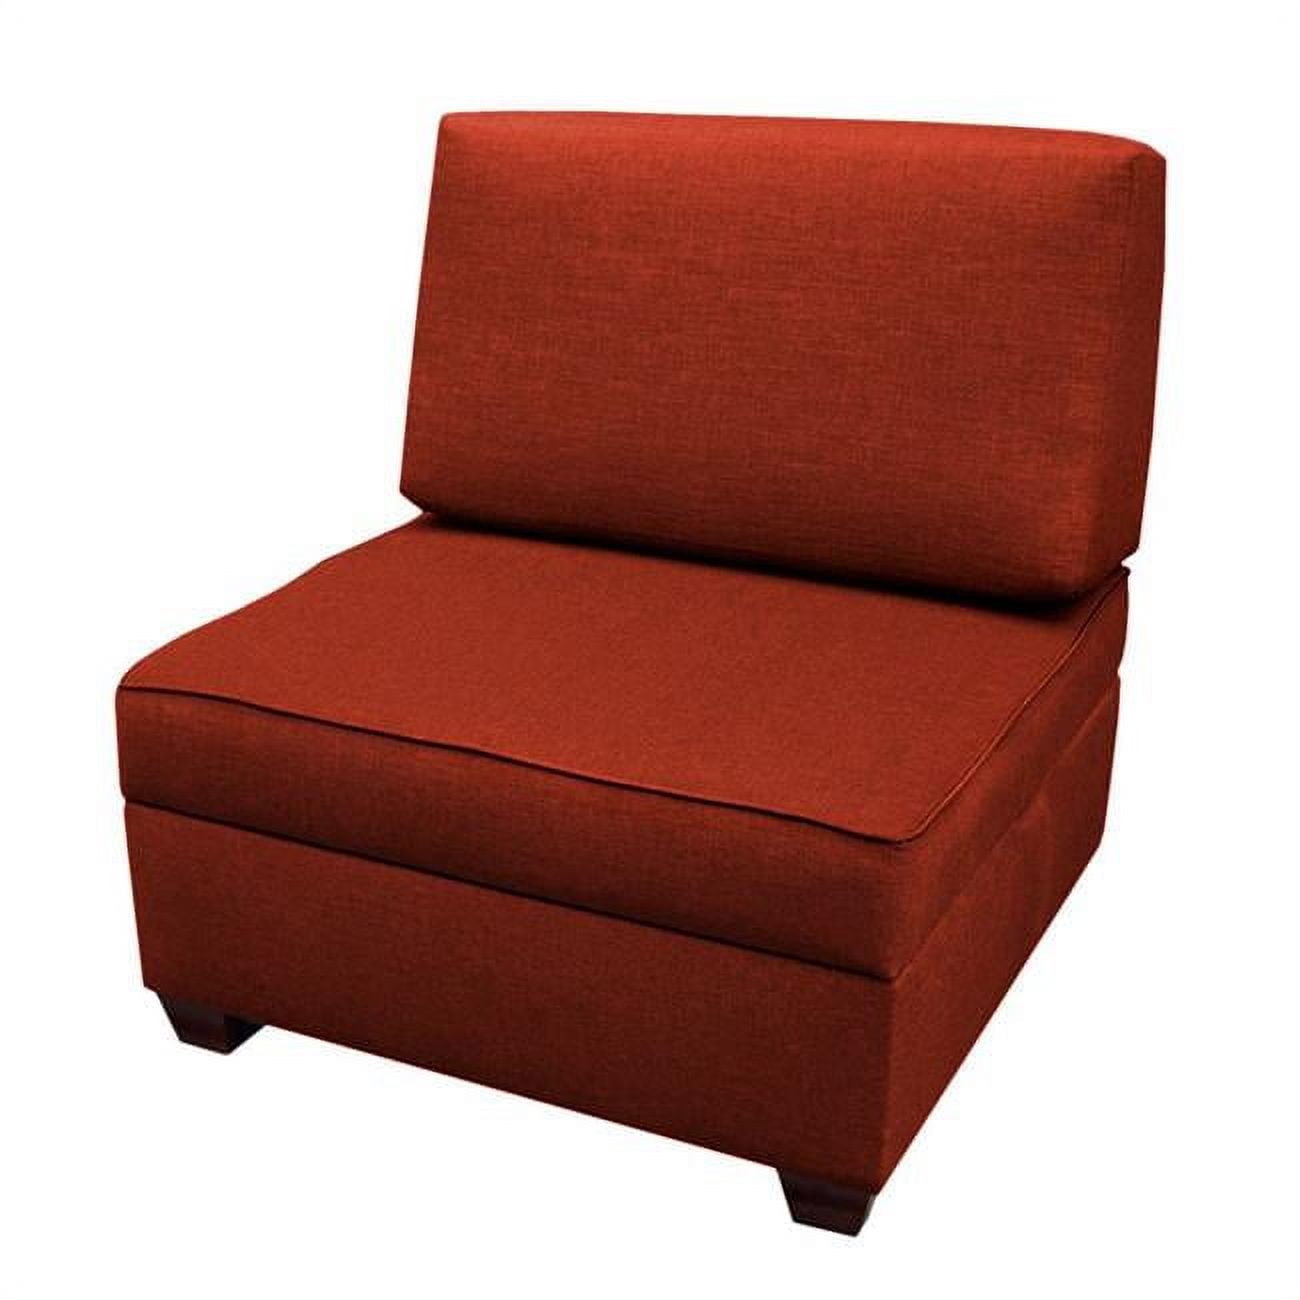 Mfch30-tc 30 In. Chair Plus 1 Bs Storage Ottomans - Brick